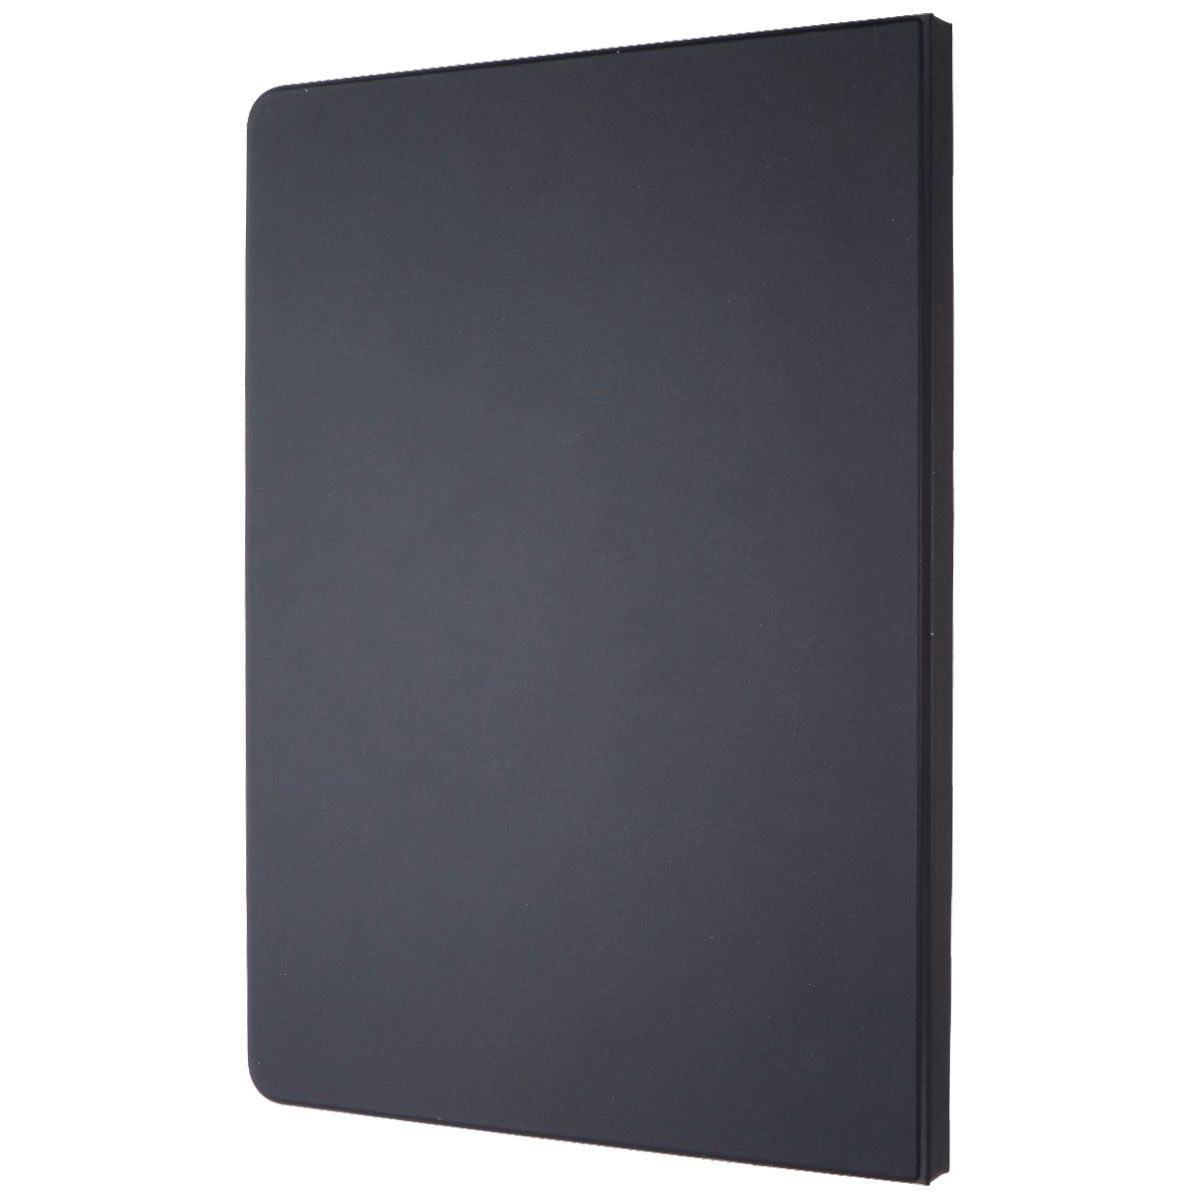 SAMSUNG Book Cover Keyboard Slim for Samsung Galaxy Tab S8/Tab S7 - Mystic Black